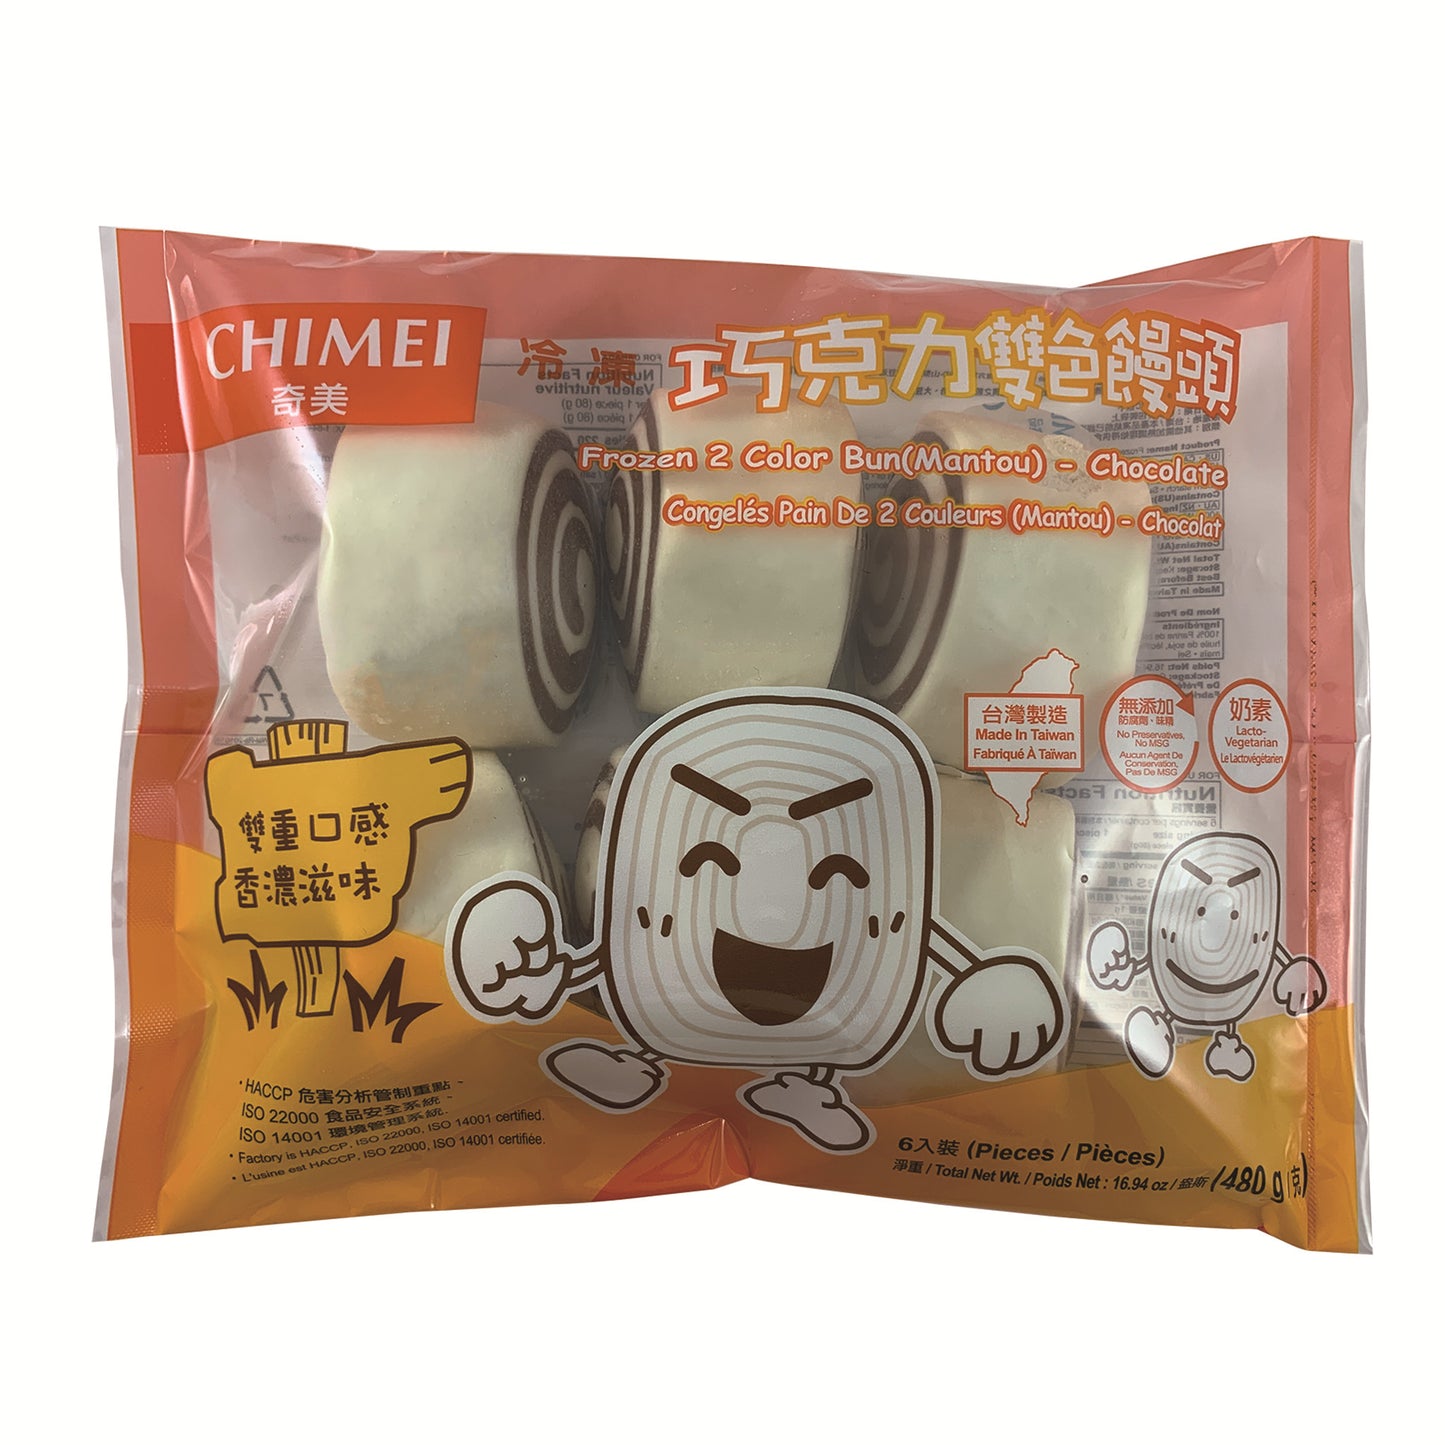 ChiMei 2 Color Bun(Chocolate) 奇美 巧克力雙色饅頭